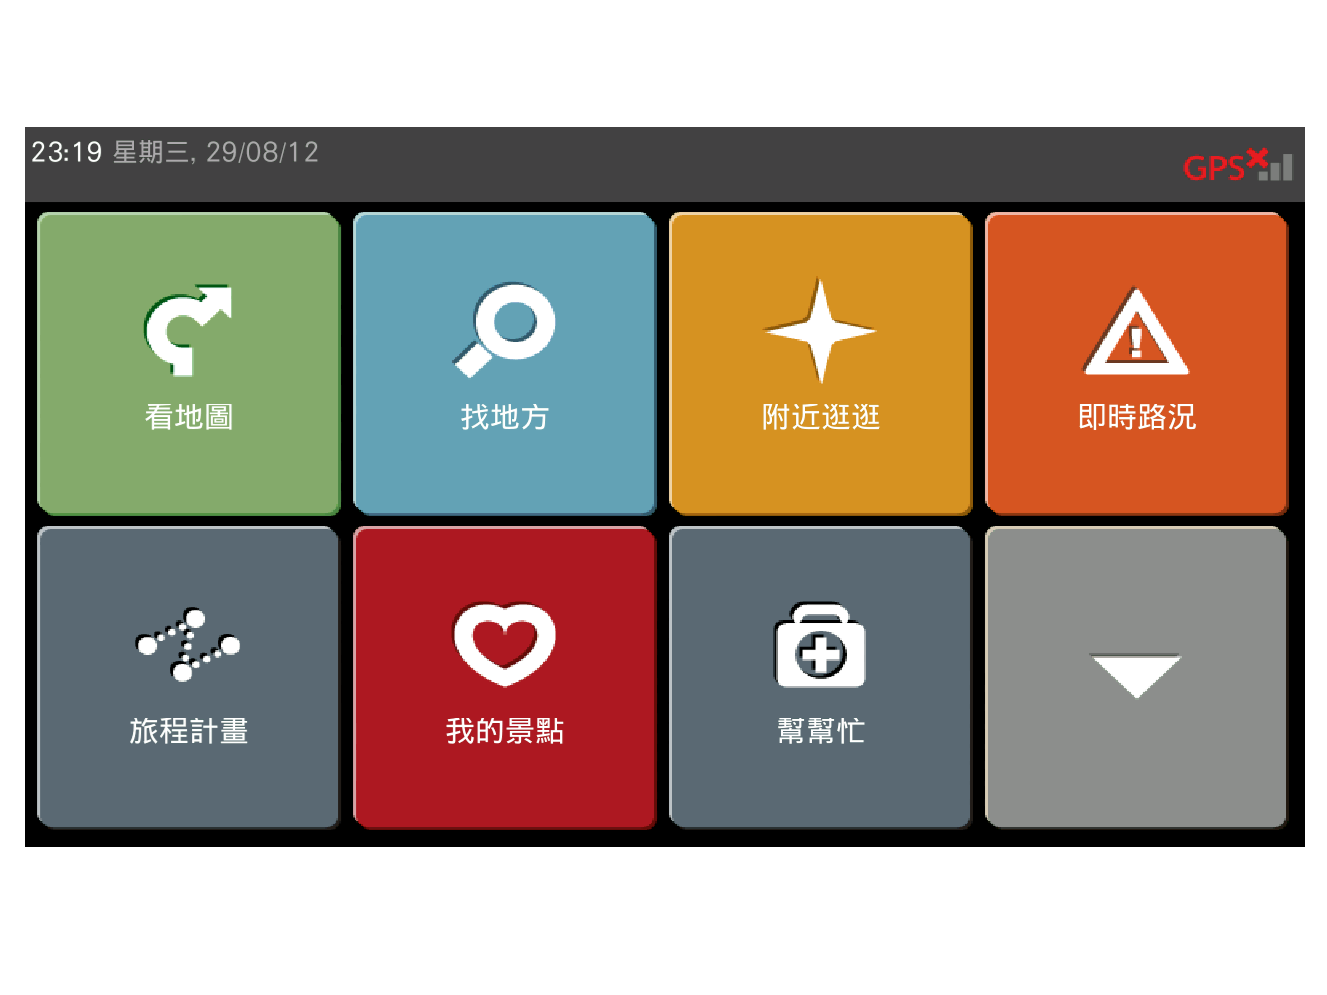 Mio 推出 Android 版導航軟體 MioMap Pro Taiwan ，小編評測報告